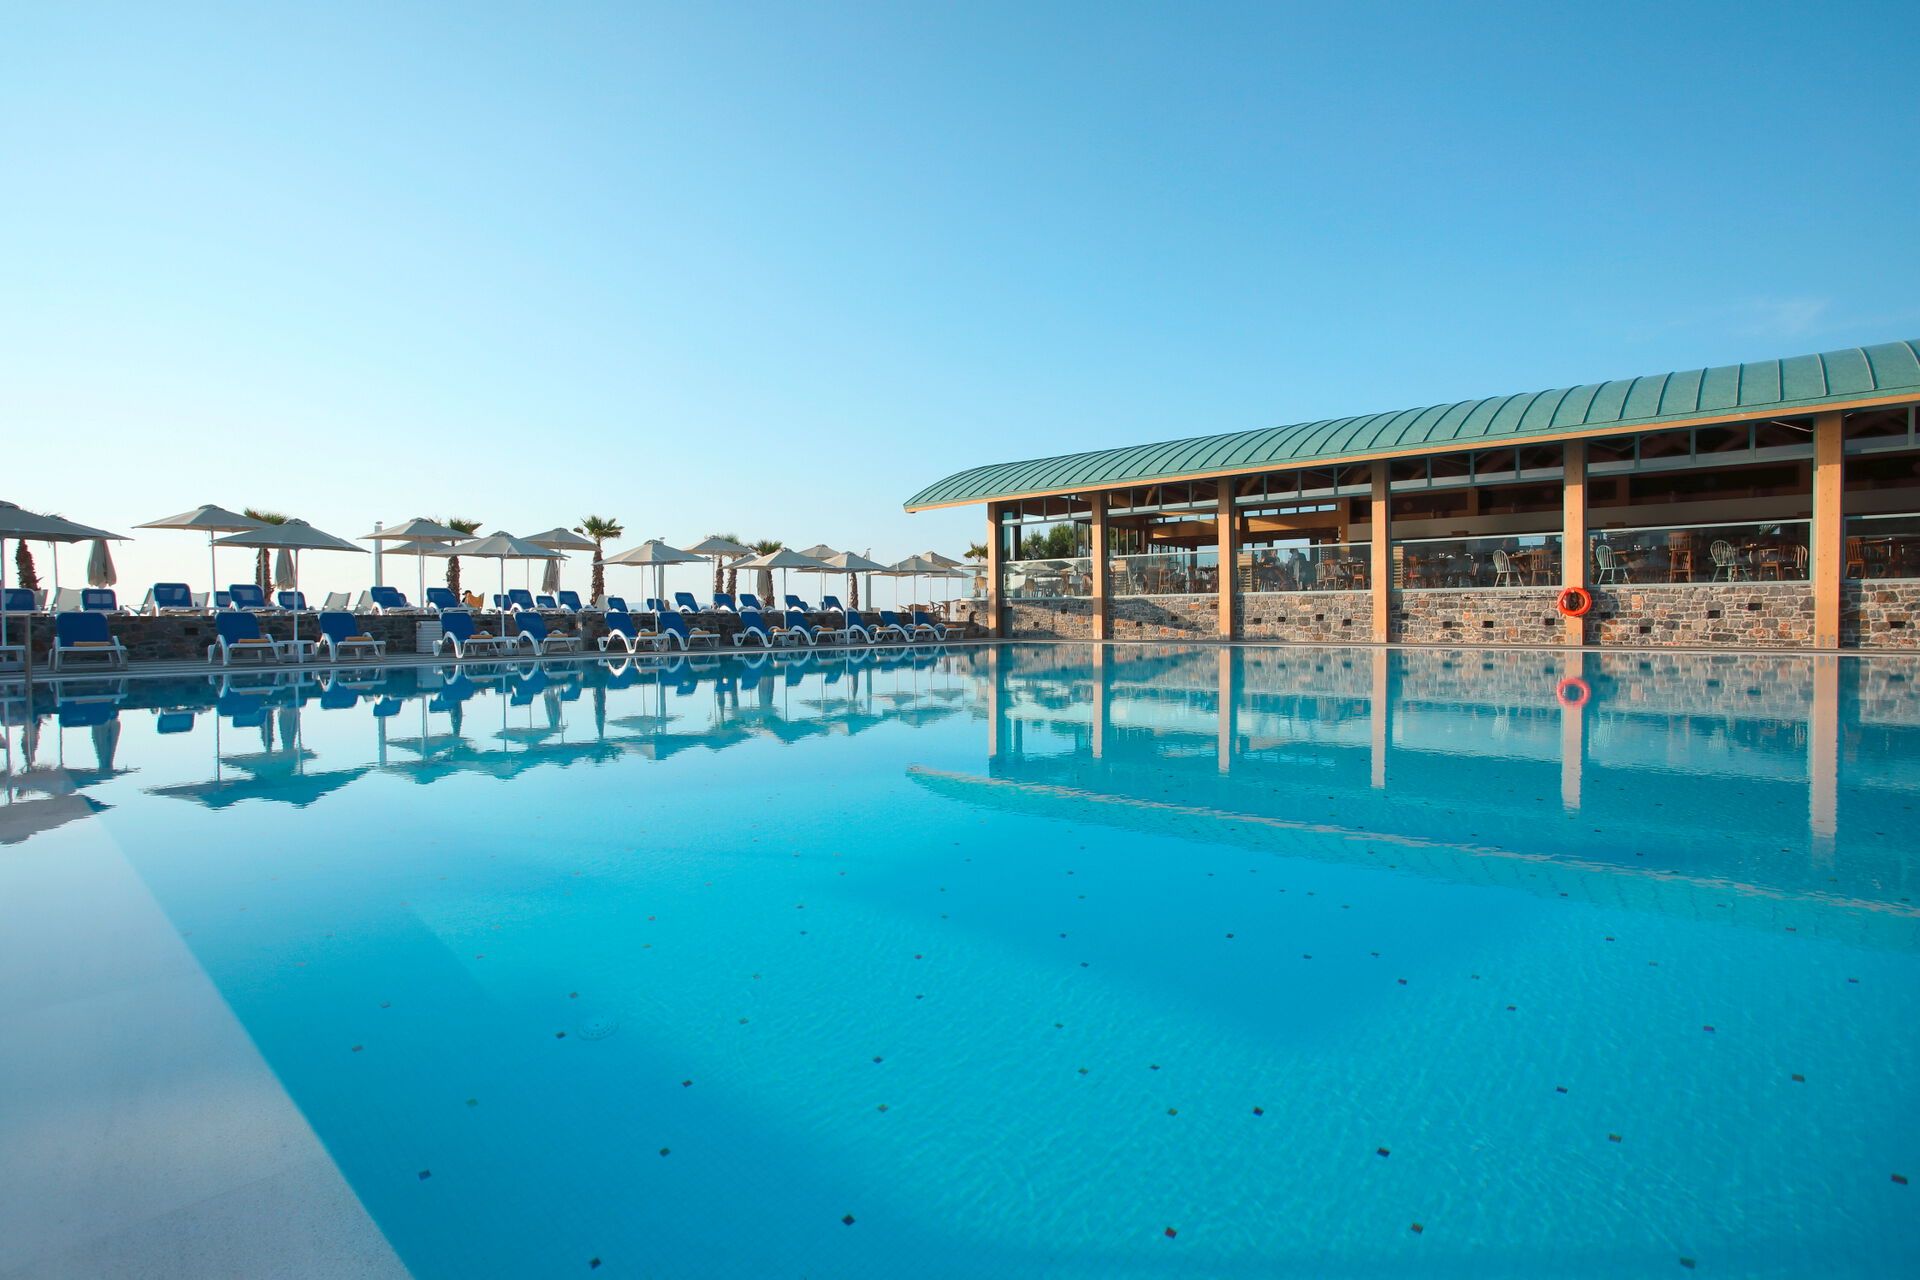 Crète - Heraklion - Grèce - Iles grecques - Hôtel Arina Beach Resort 4*